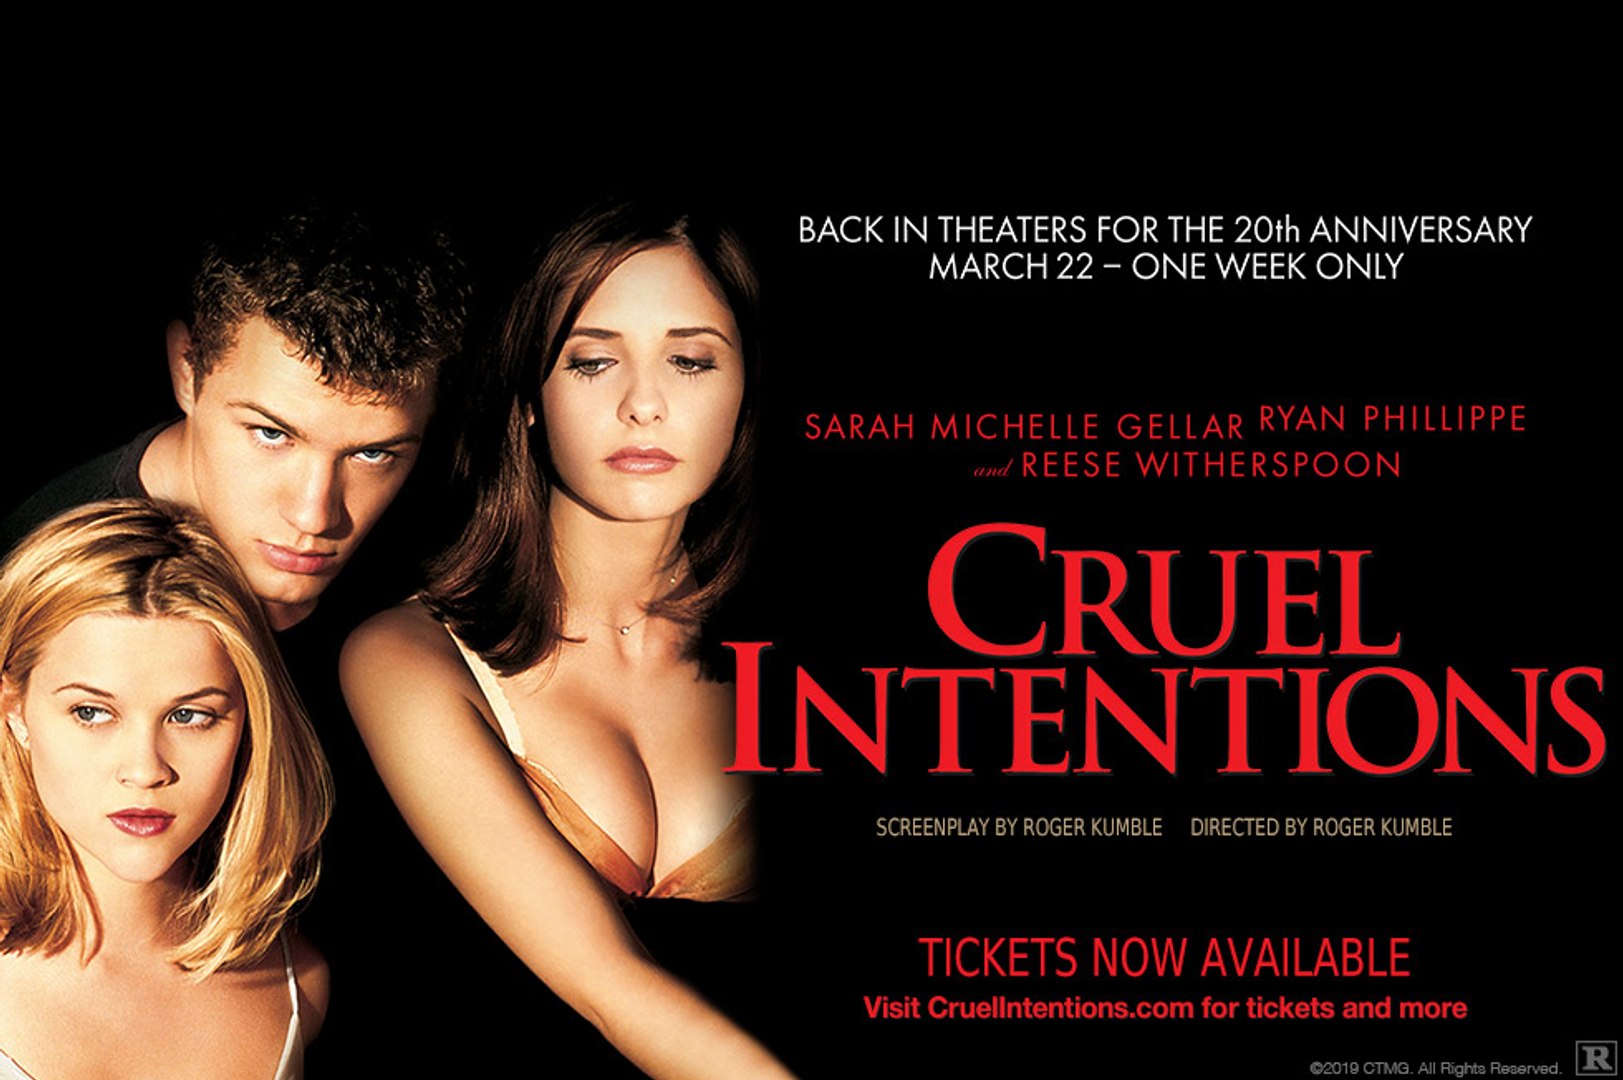 Cruel Intentions railer #1 (2019) Sarah Michelle Gellar, Ryan Phillippe  Drama Movie HD - video Dailymotion